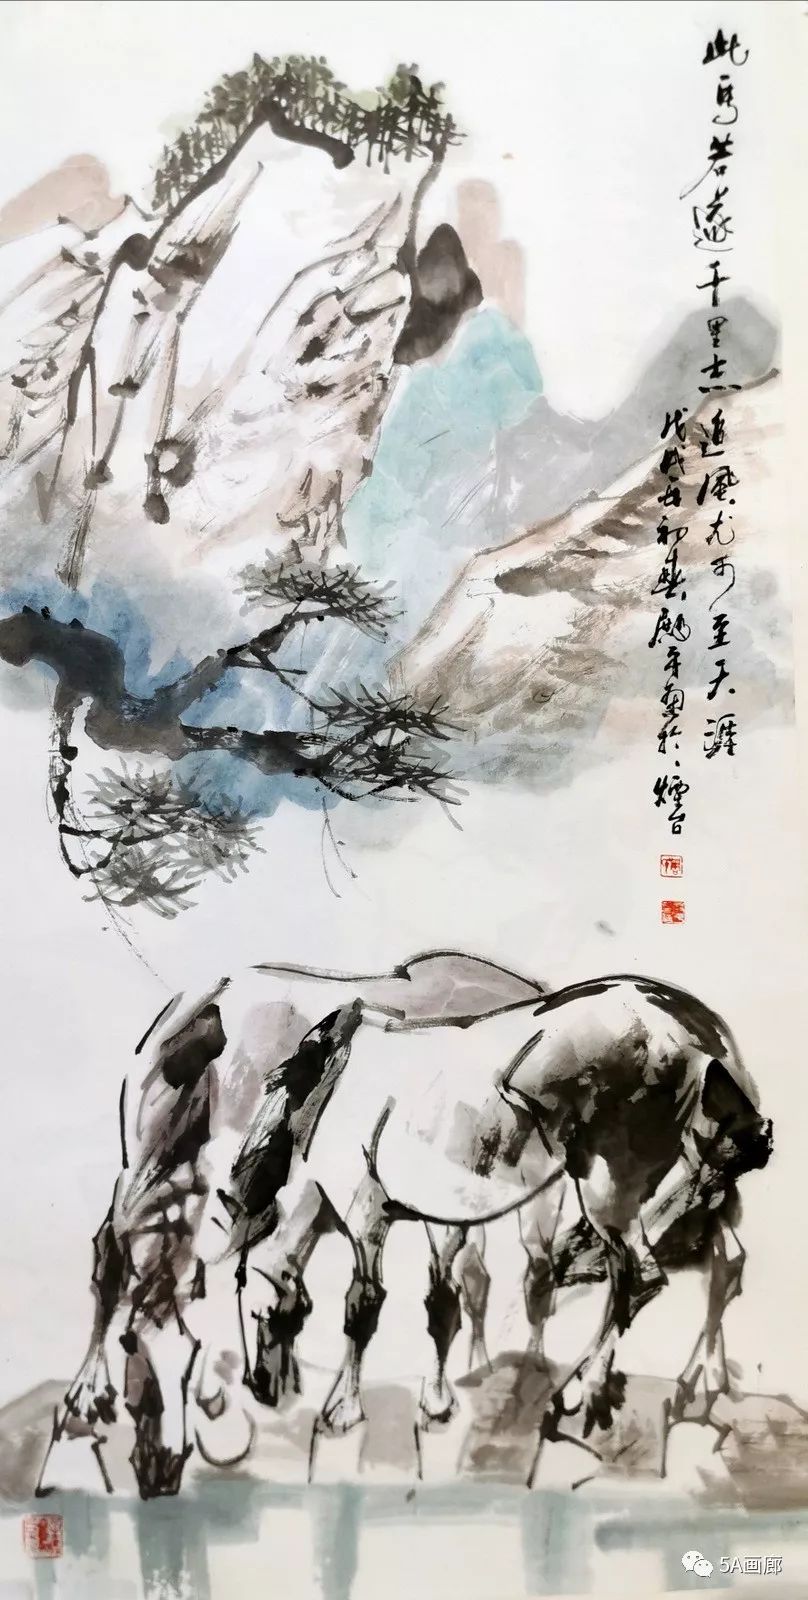 【5a预告】盛世丹青——中国当代画马名家周殿平精品画展